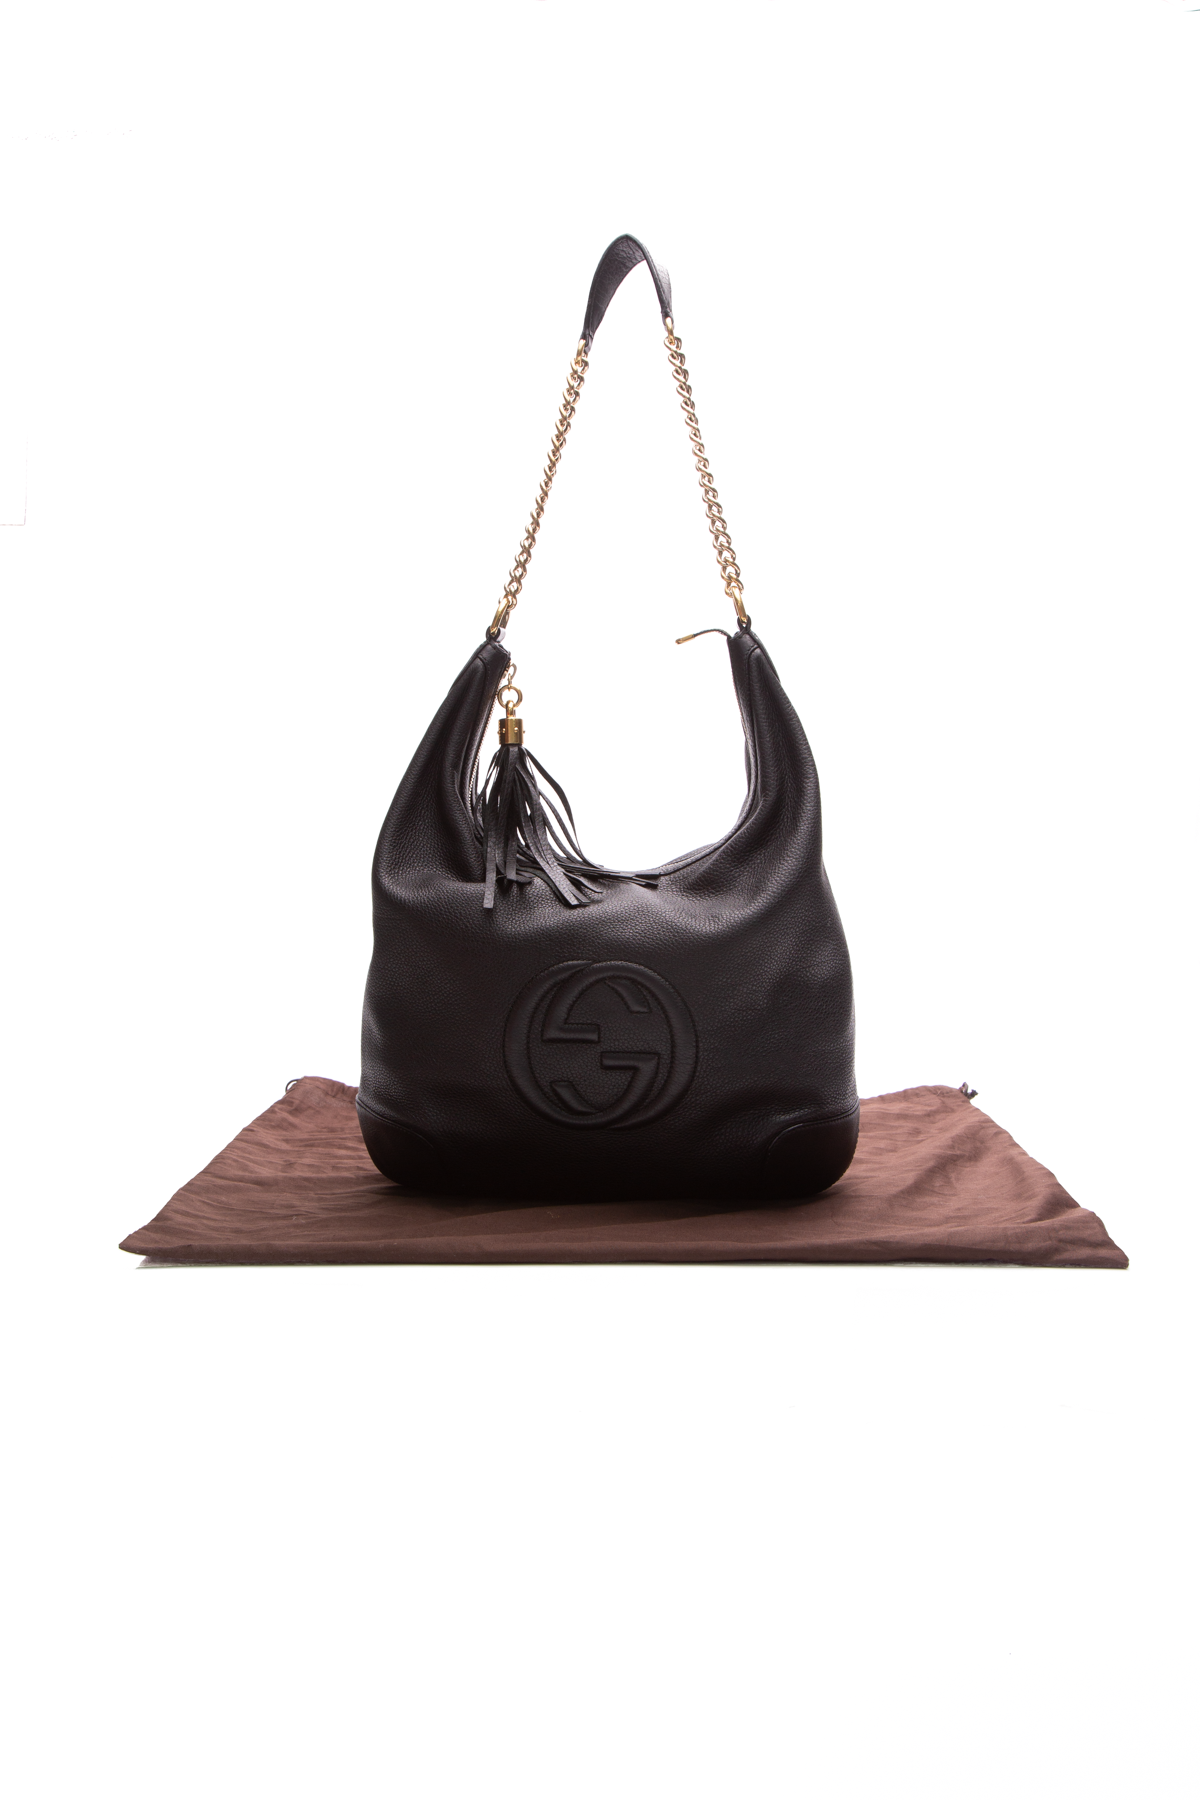 Chanel Paris-Salzburg Saddle Bag - Grey Crossbody Bags, Handbags